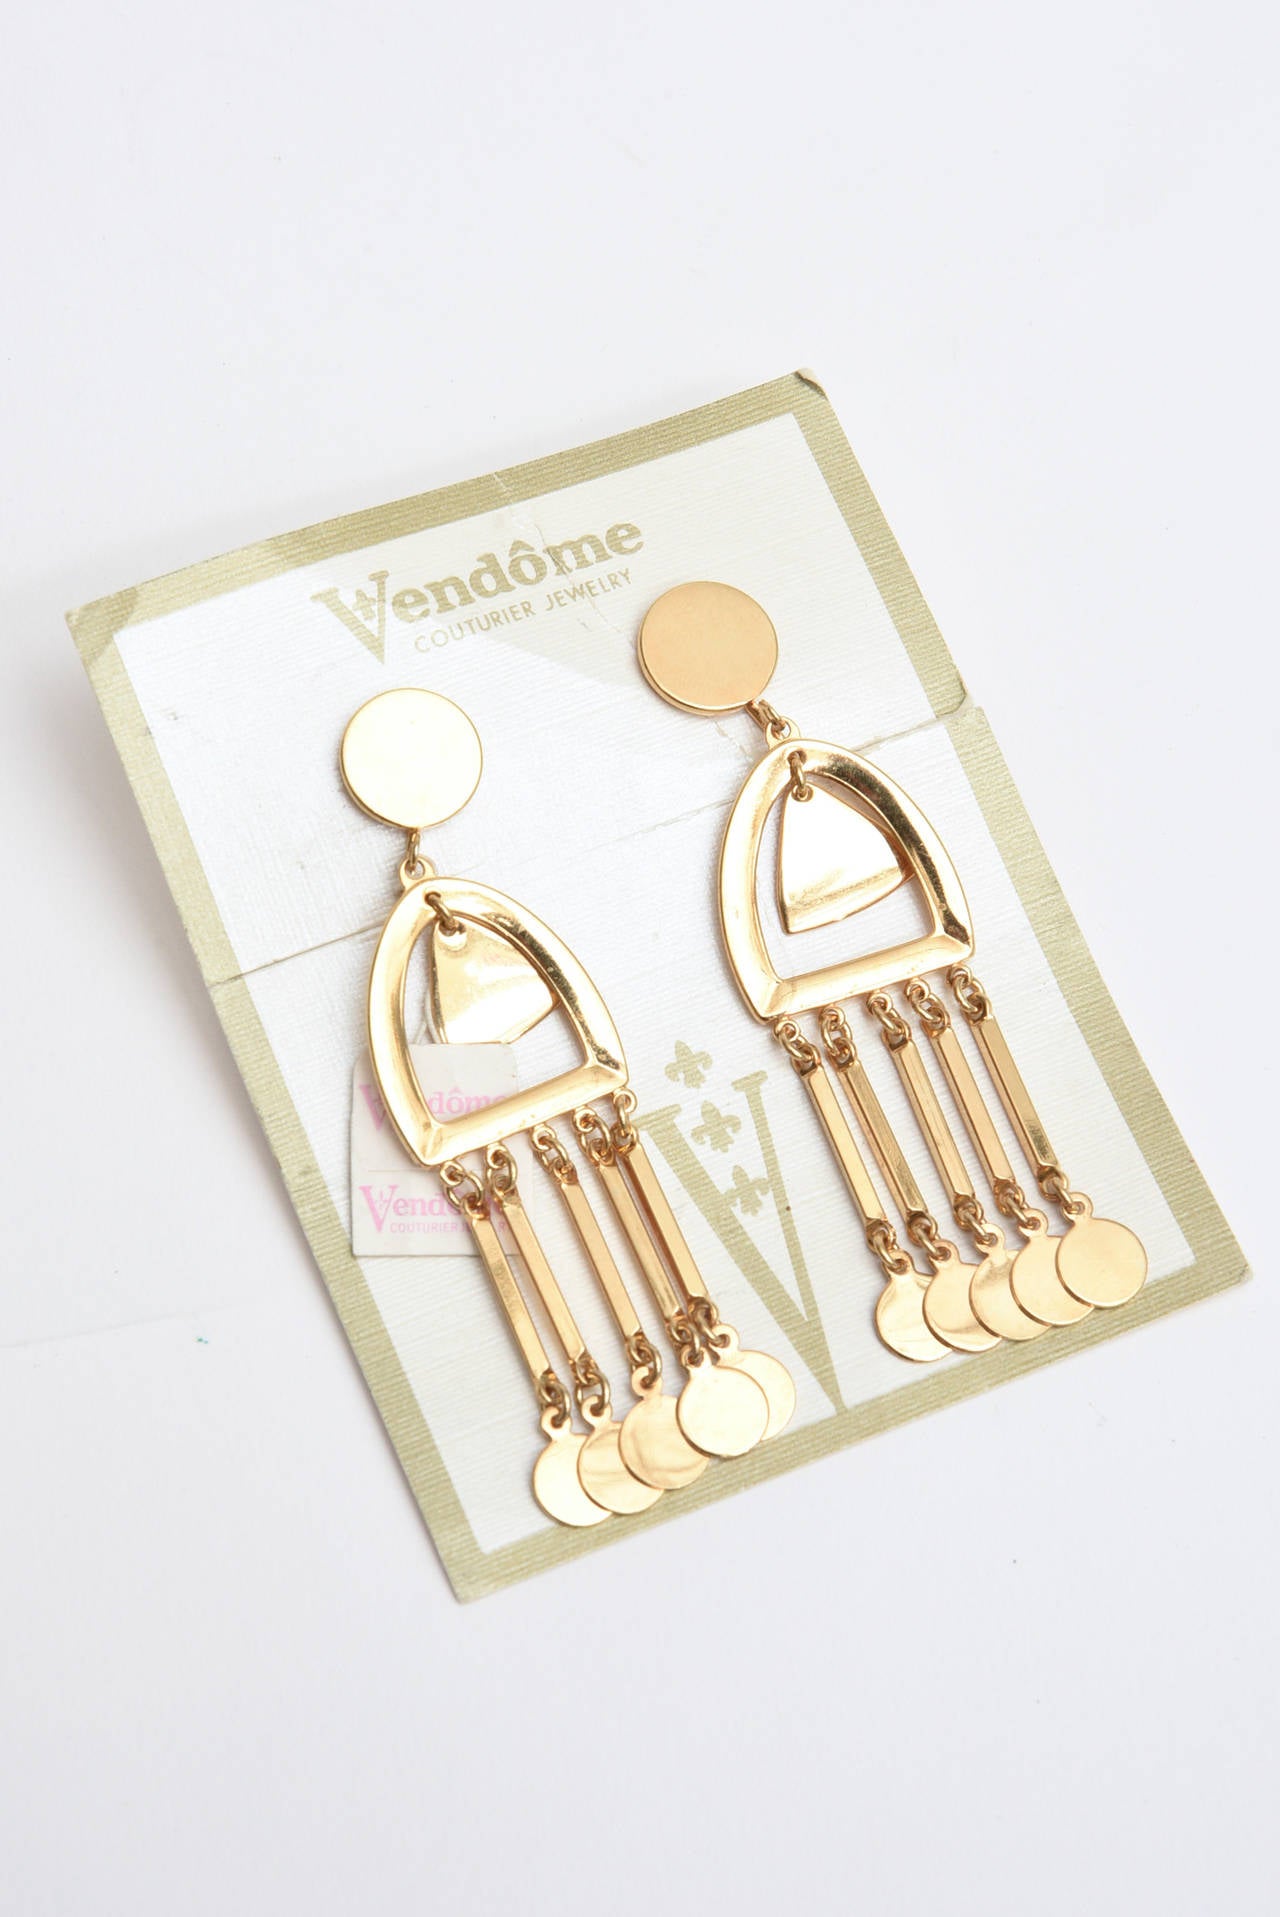   Vendome Vintage  Moderne Gold Plated Dangle Screw Back Earrings For Sale 1